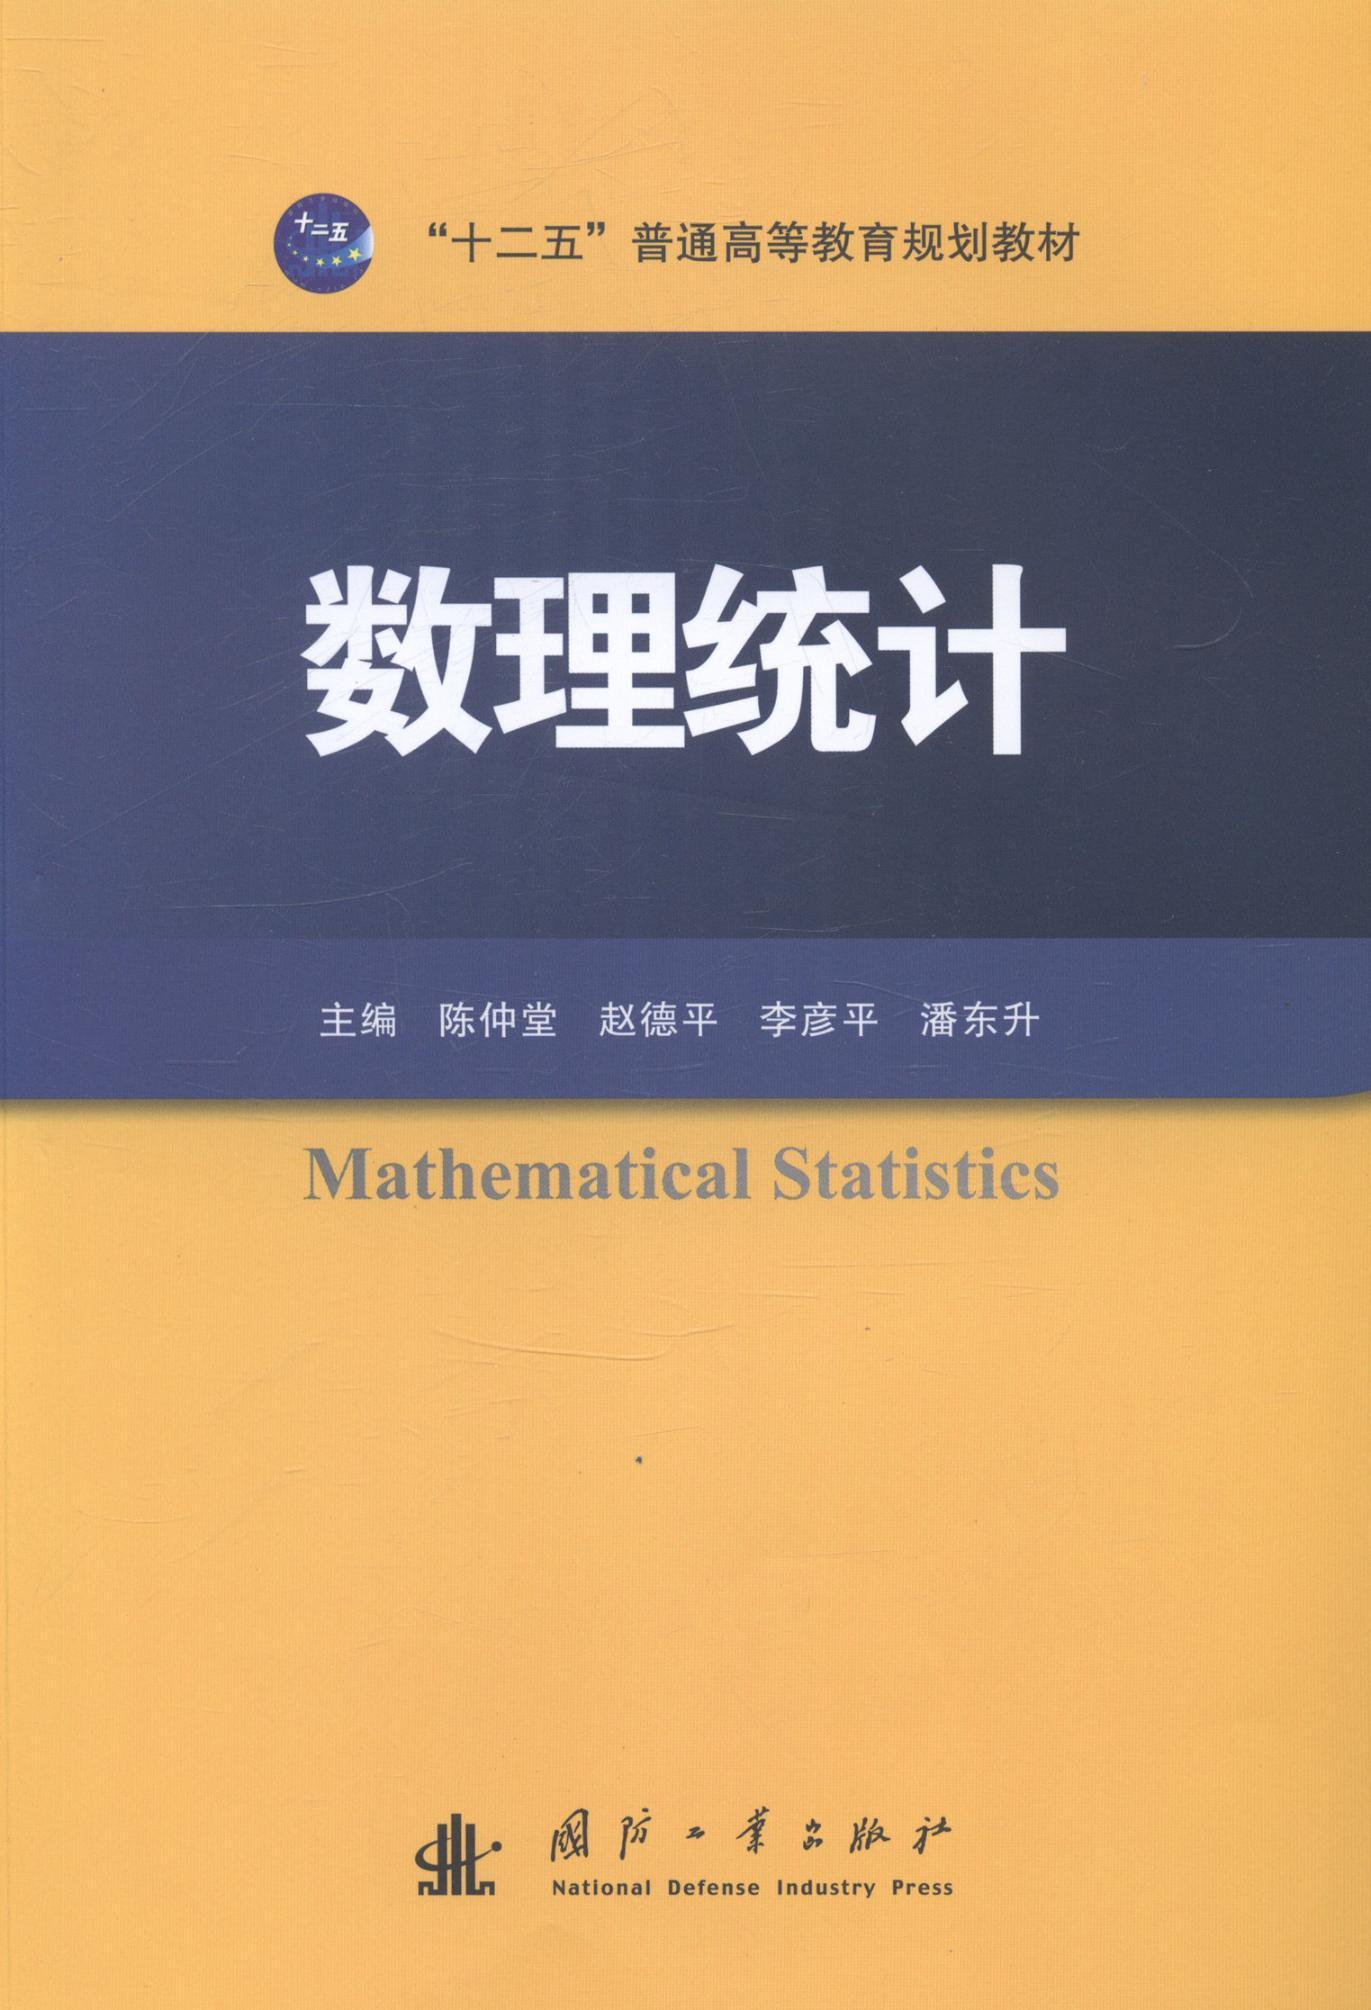 [rt] 数理统计  陈仲堂  国防工业出版社  自然科学  数理统计高等教育教材